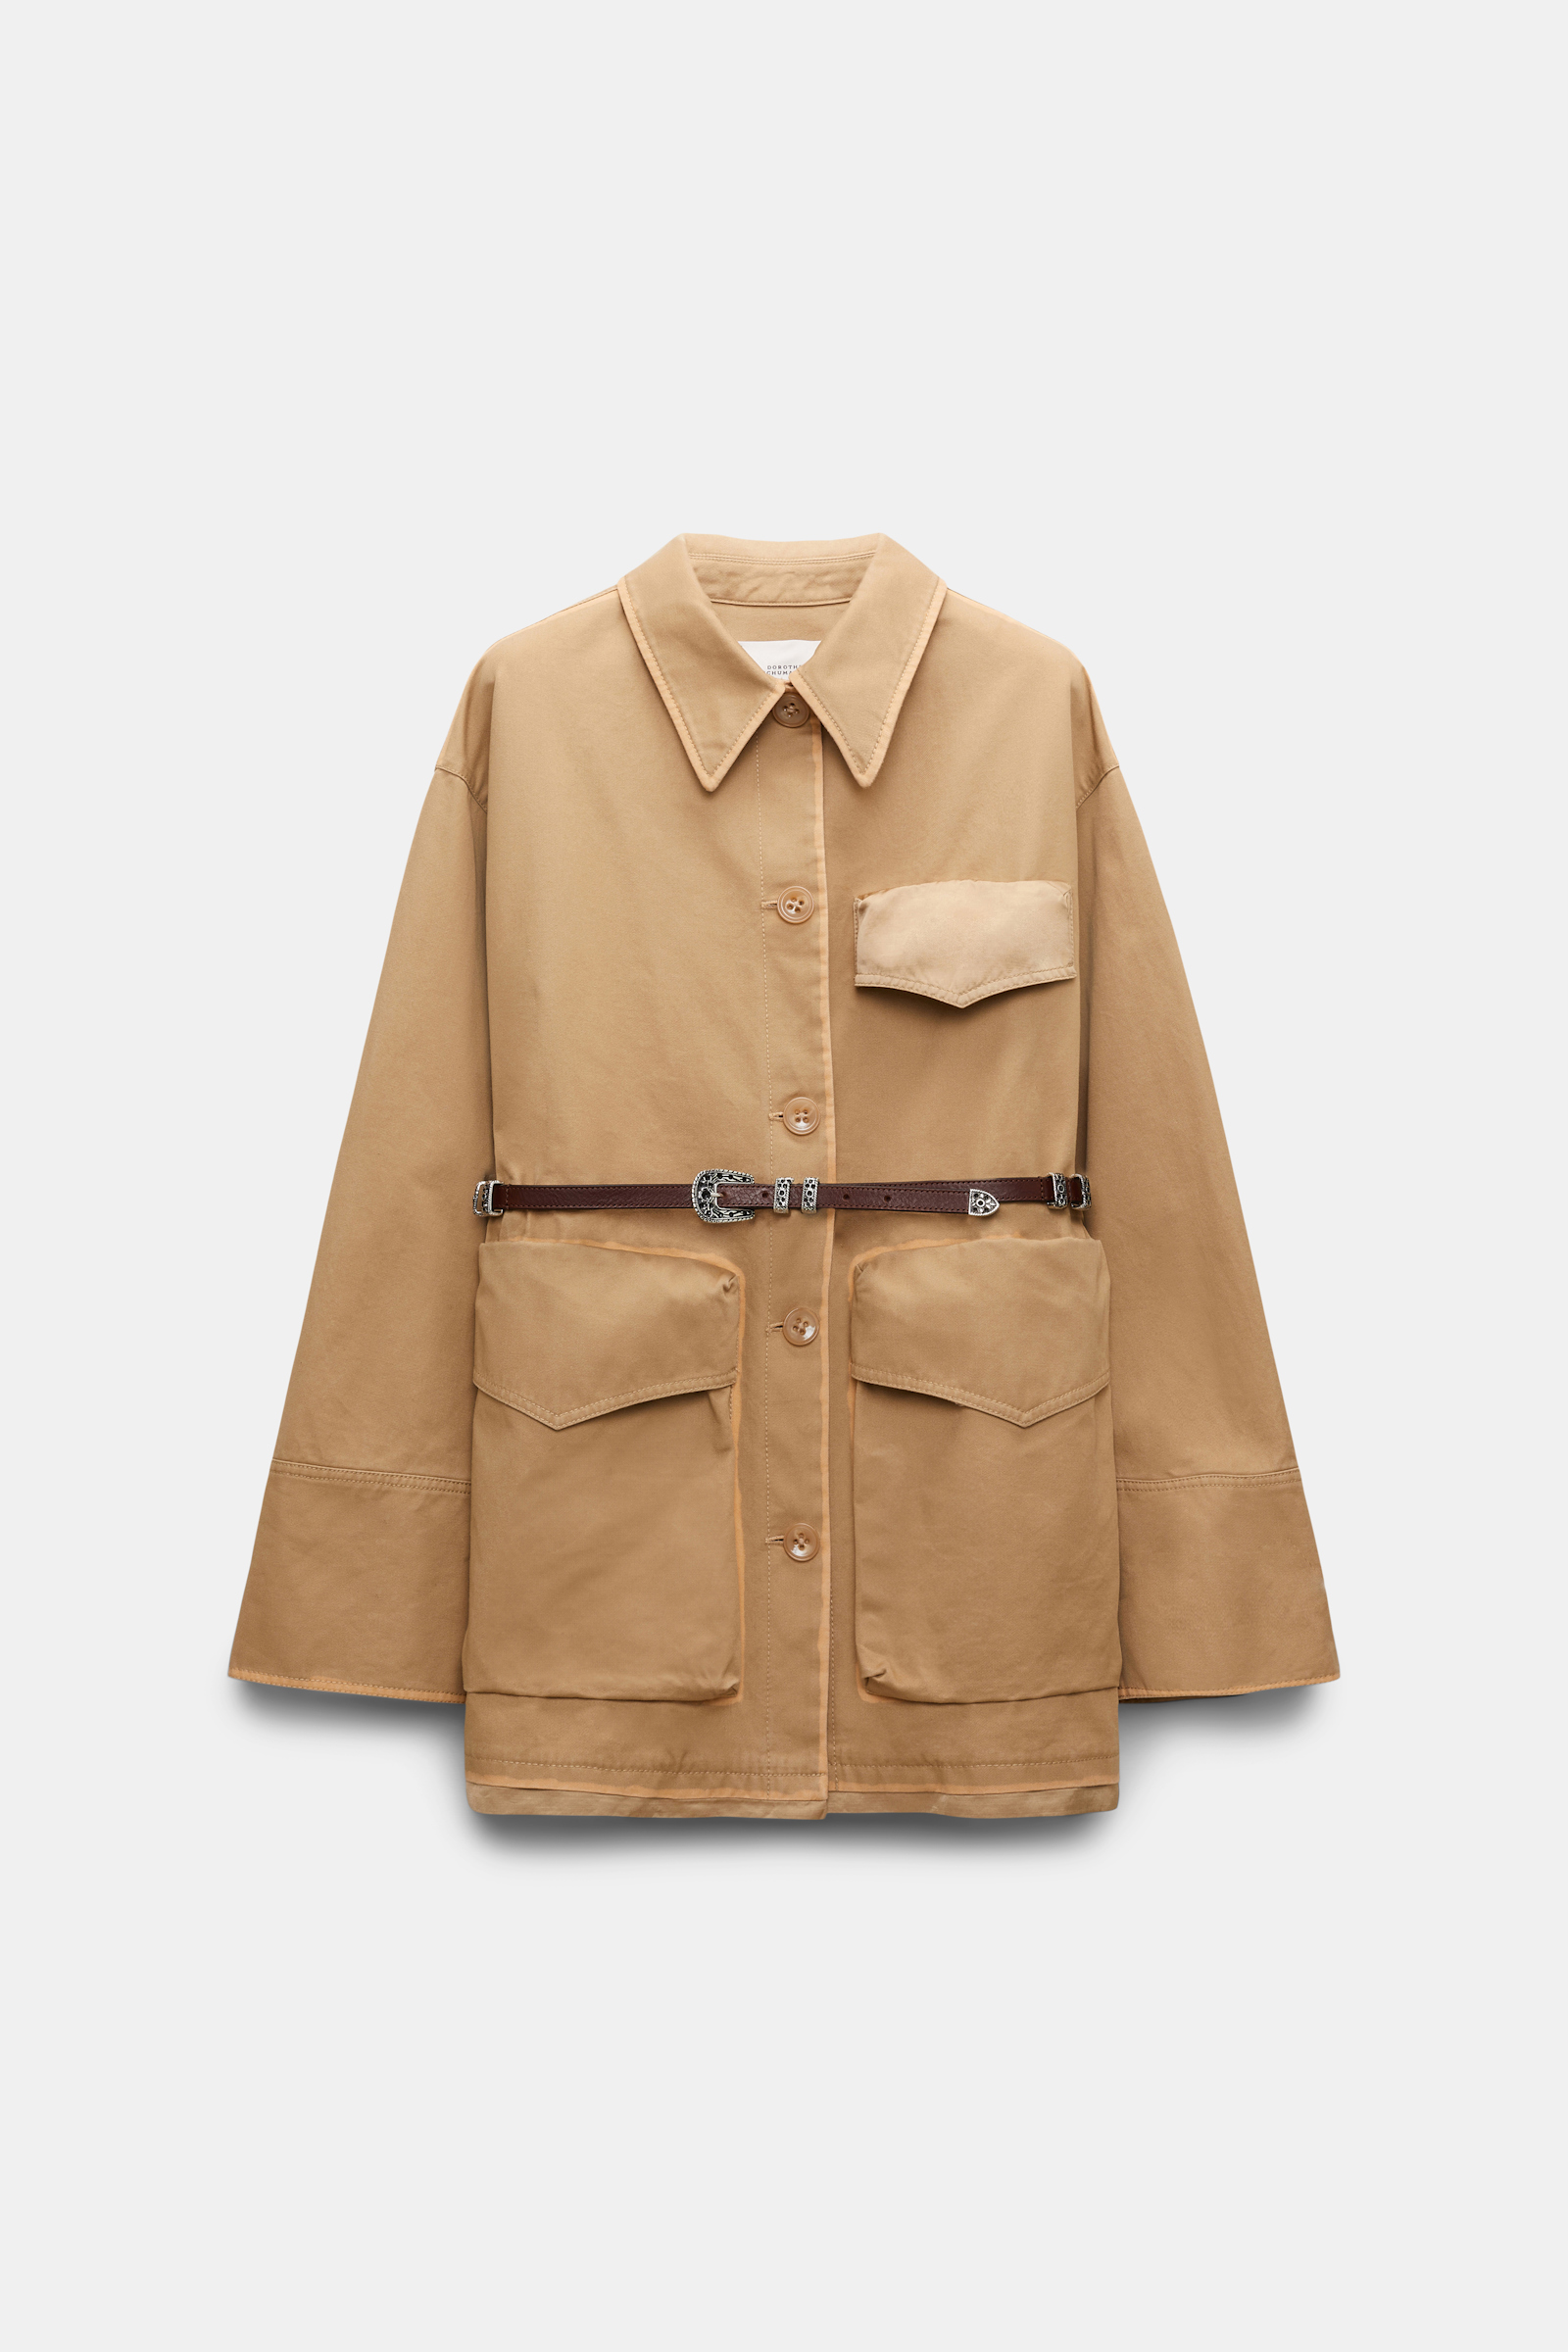 Dorothee Schumacher Cotton shirt-jacket with removable leather belt medium beige